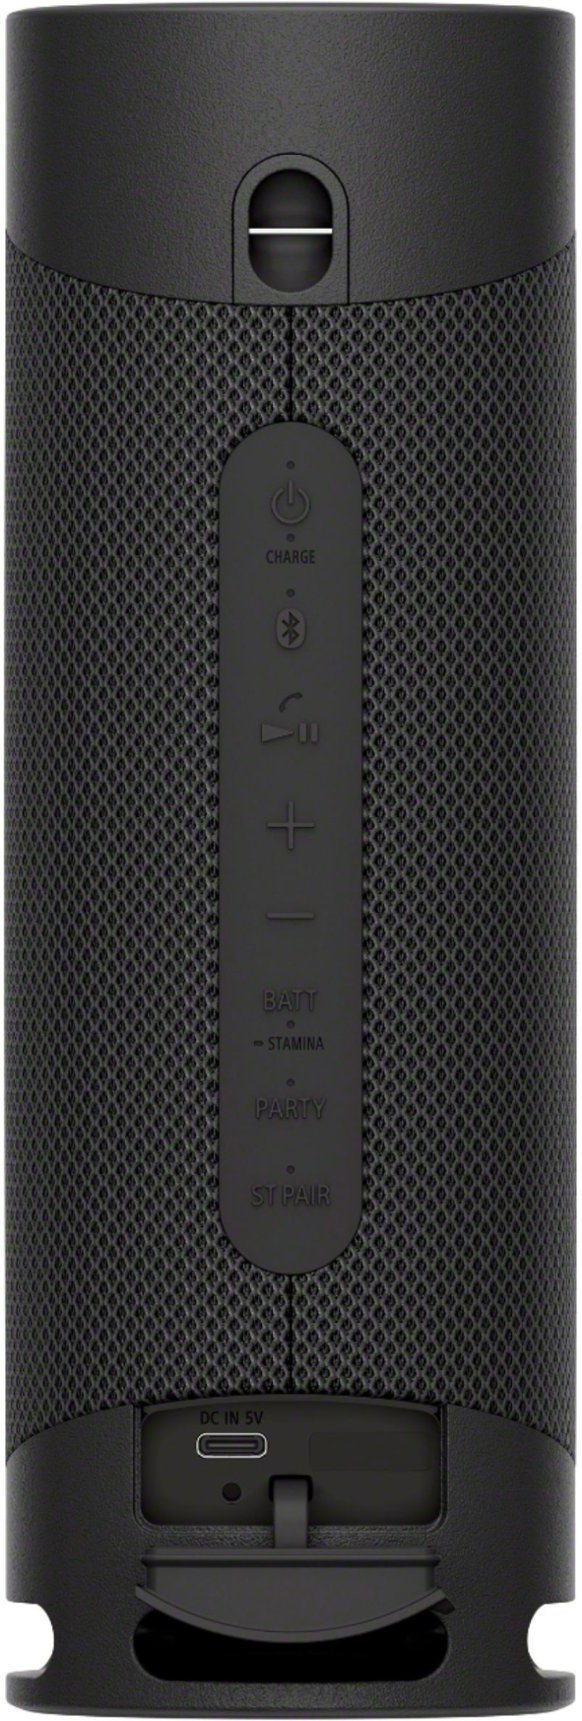 Sony SRS-XB23 Extra Bass Wireless Waterproof Portable Bluetooth Speaker - Black (New)